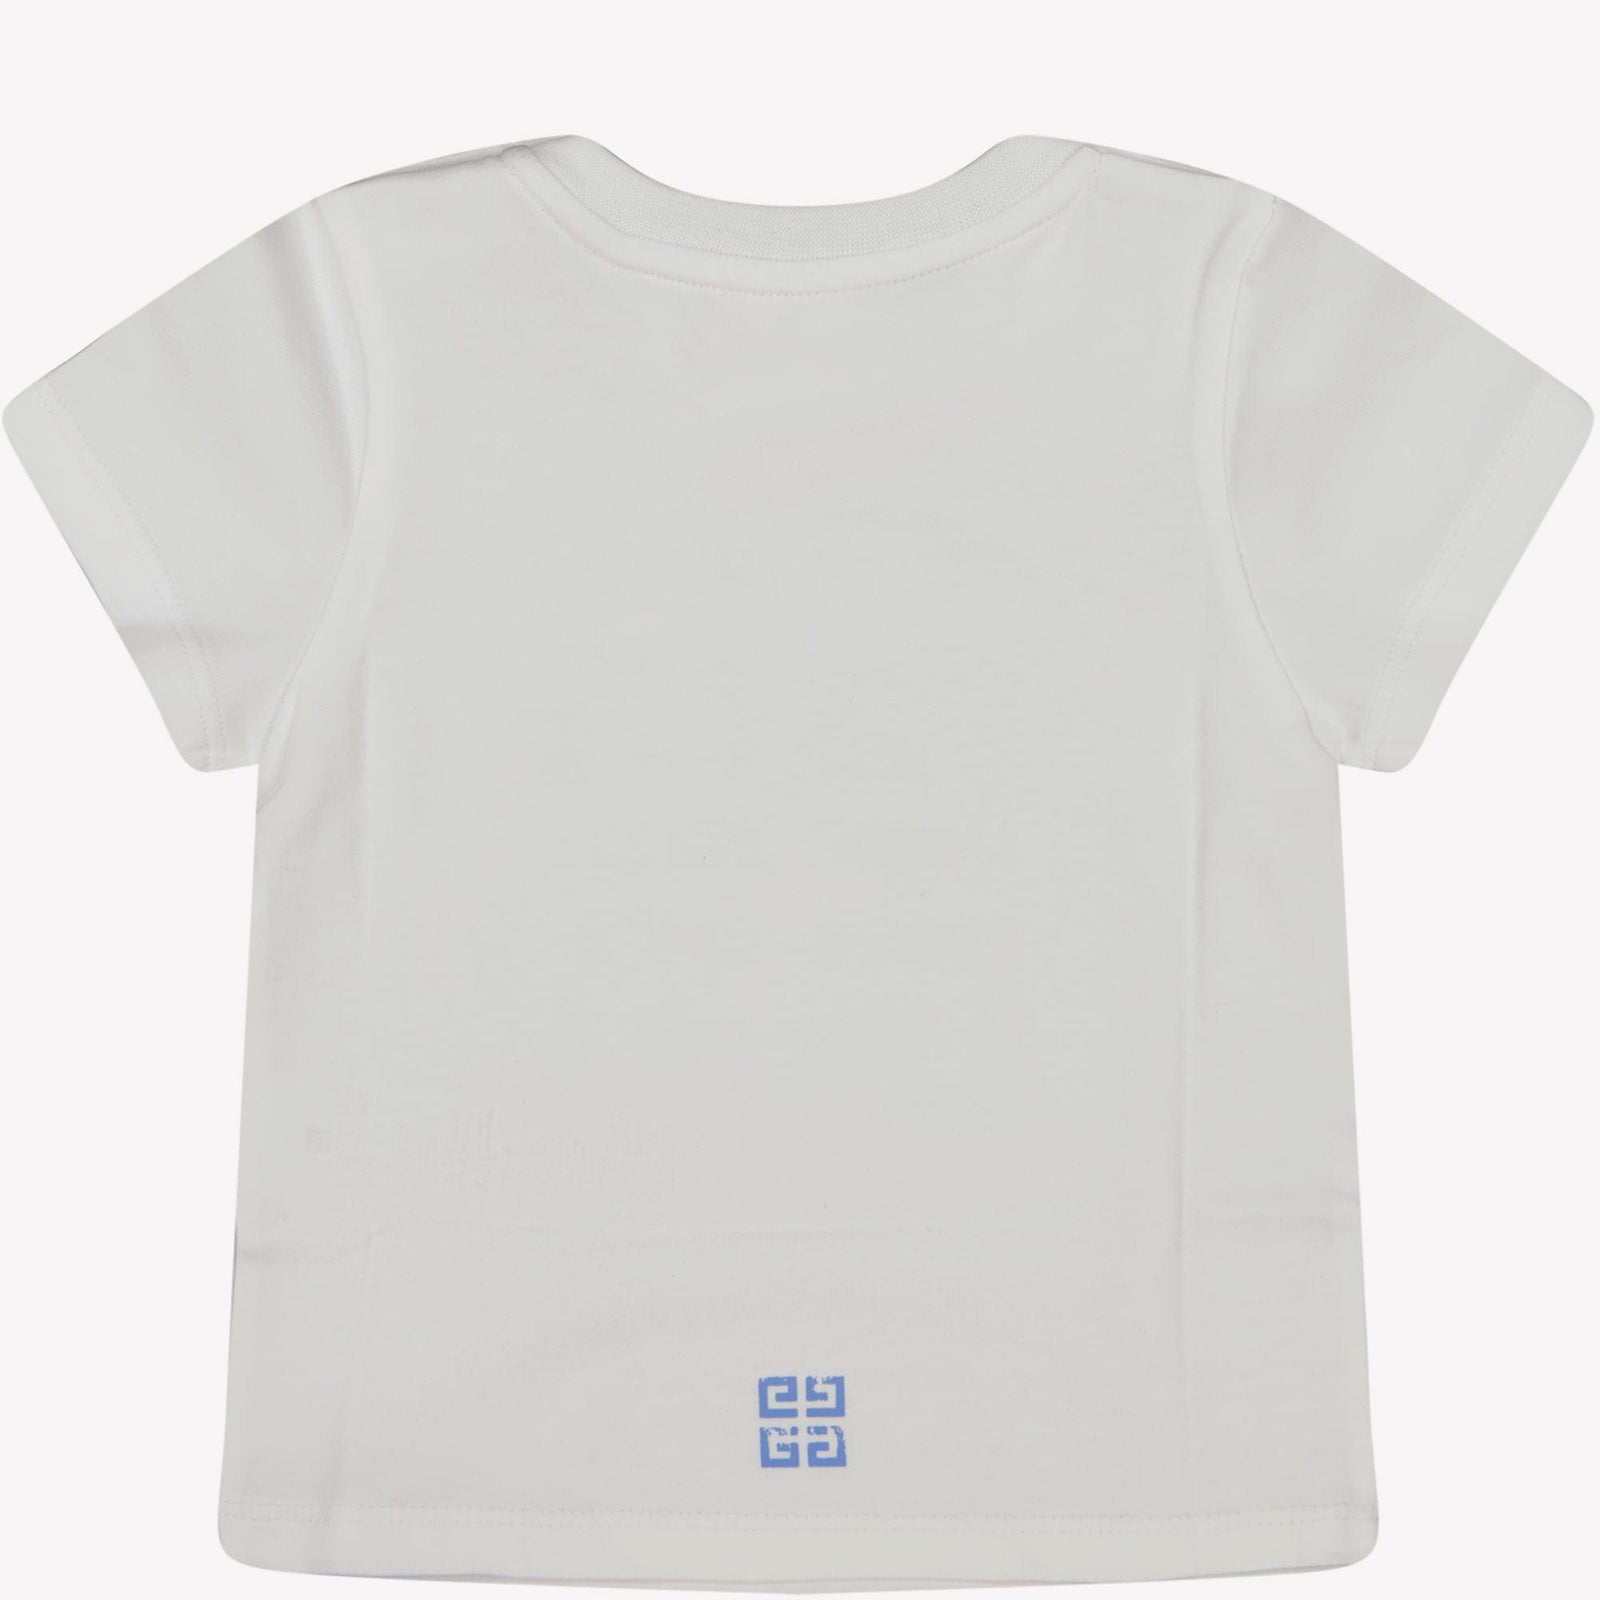 Givenchy Baby Jongens T-Shirt Wit 6 mnd